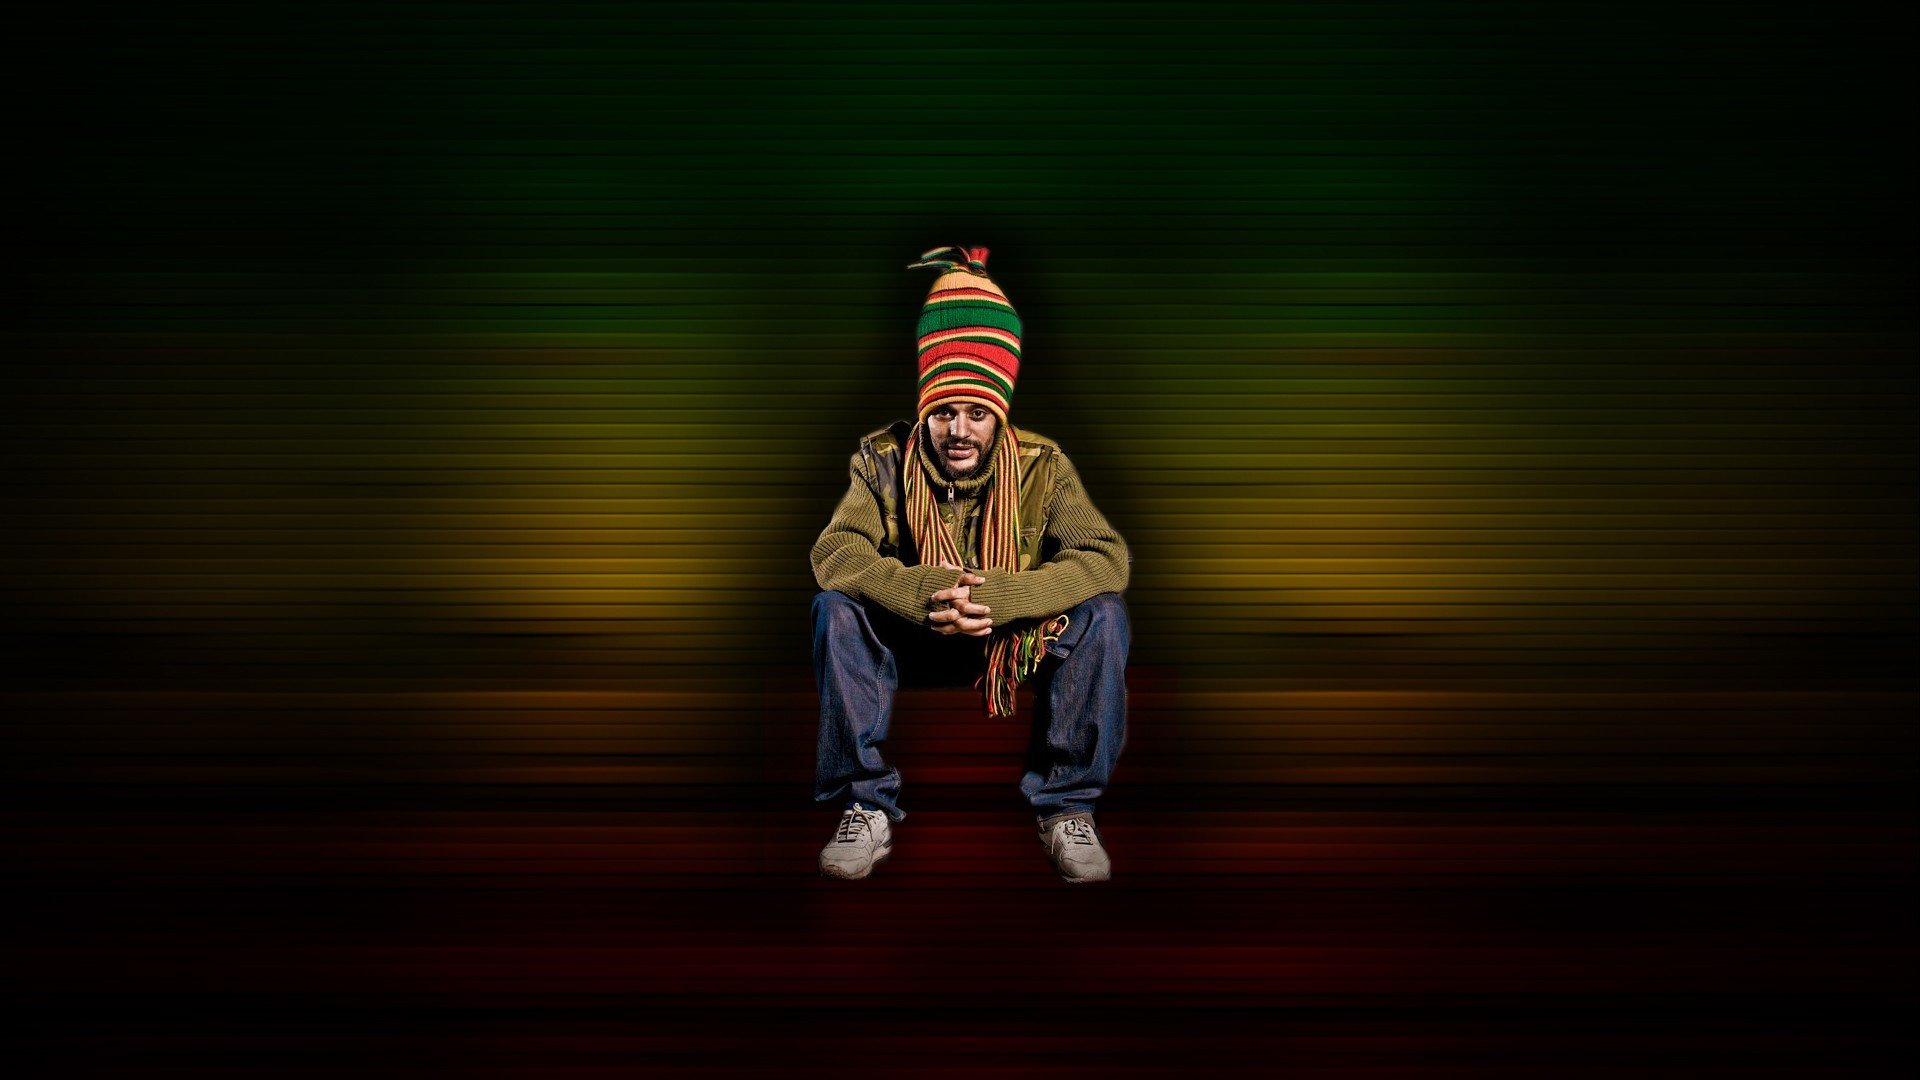 Reggae Wallpapers Hd For Desktop Backgrounds